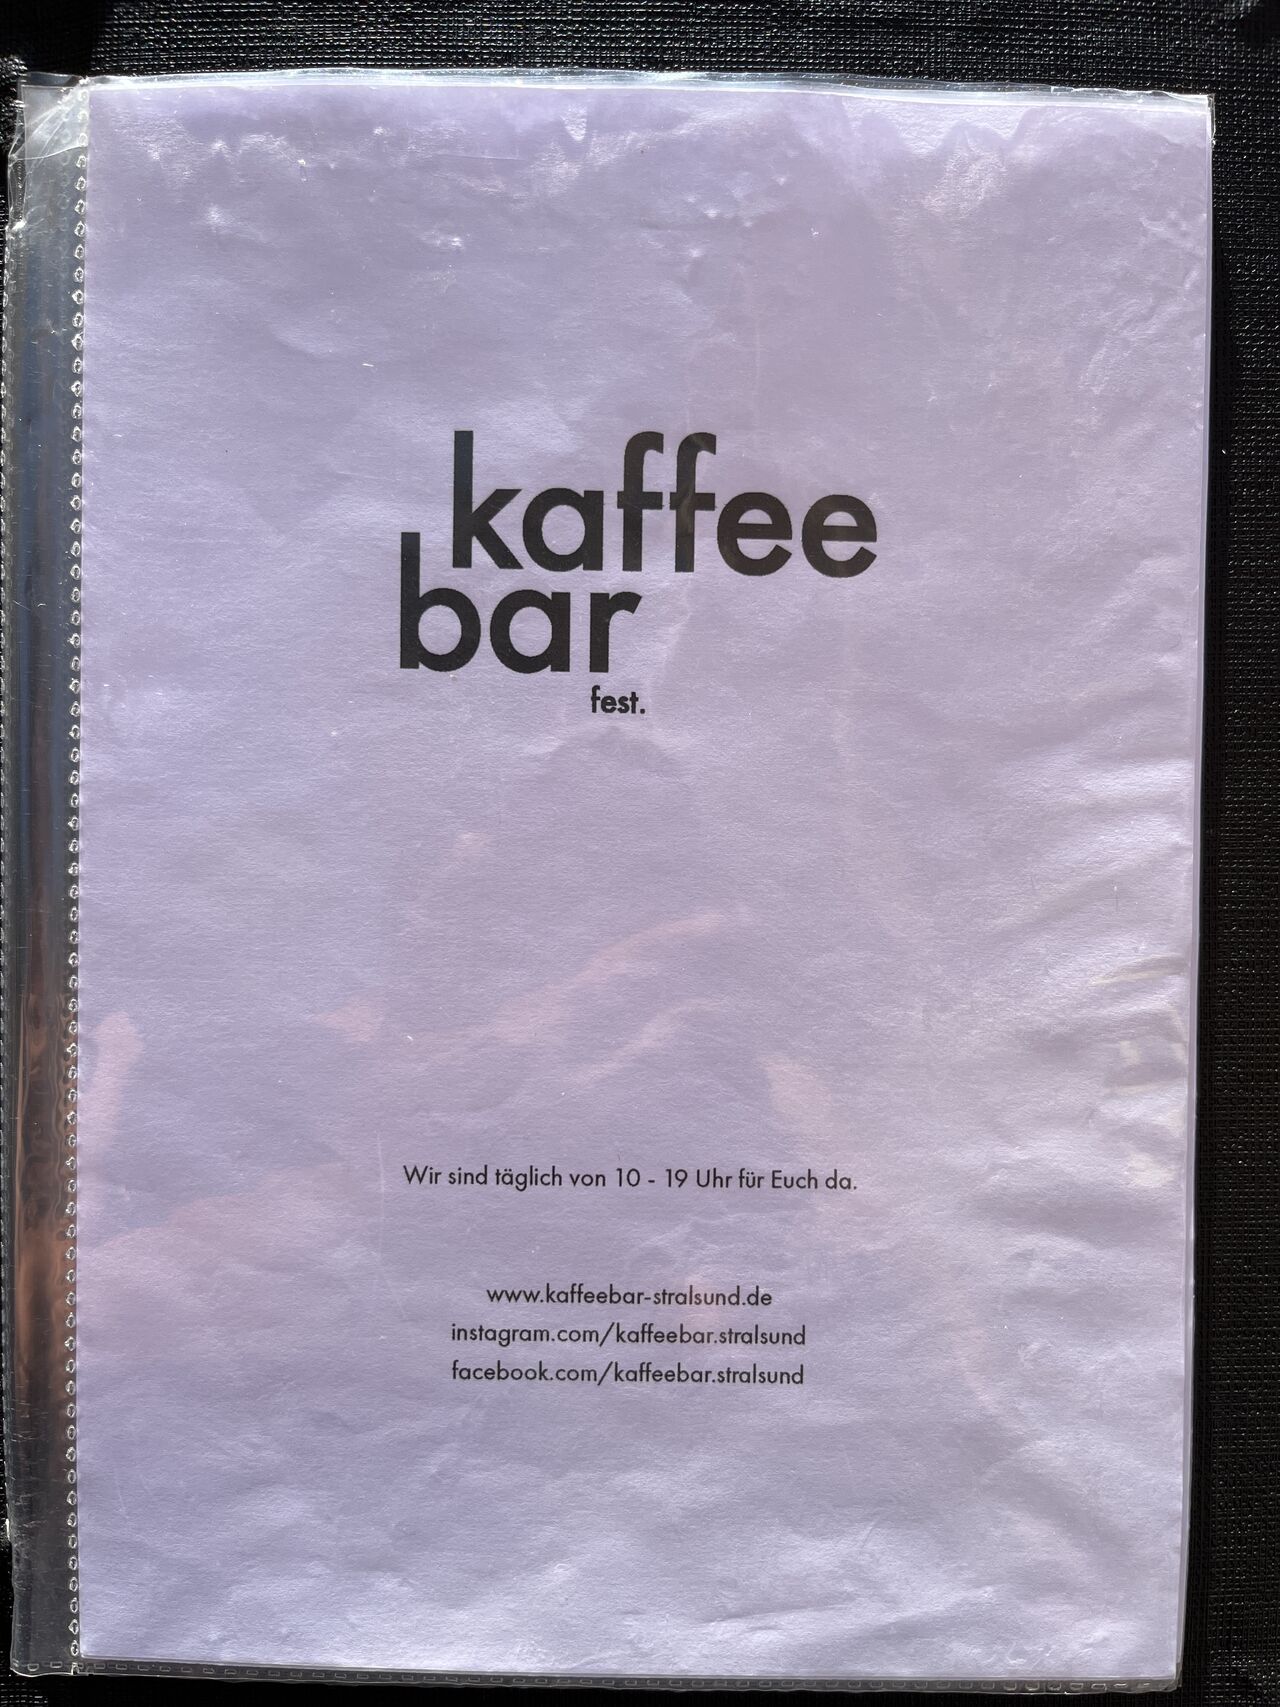 A photo of Kaffee Bar